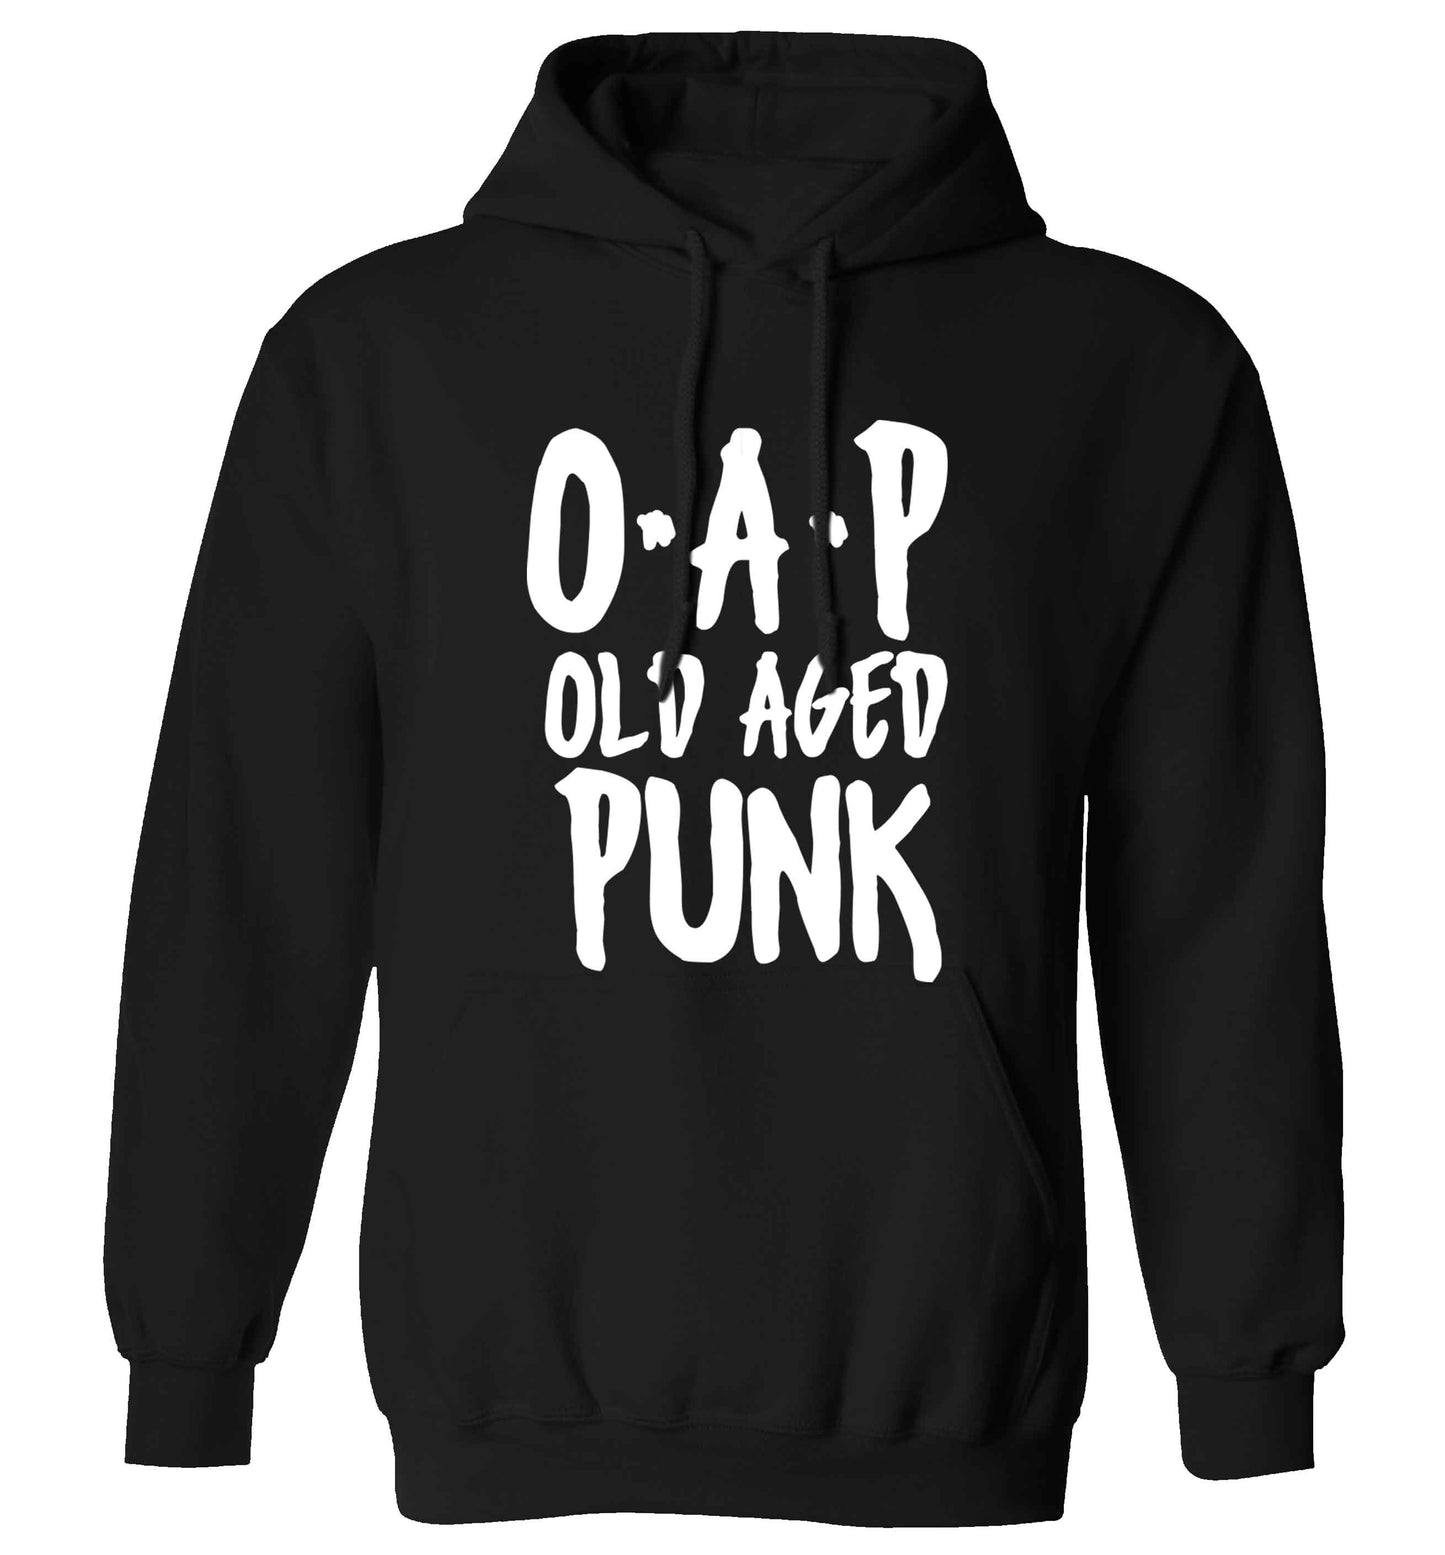 O.A.P Old Age Punk adults unisex black hoodie 2XL